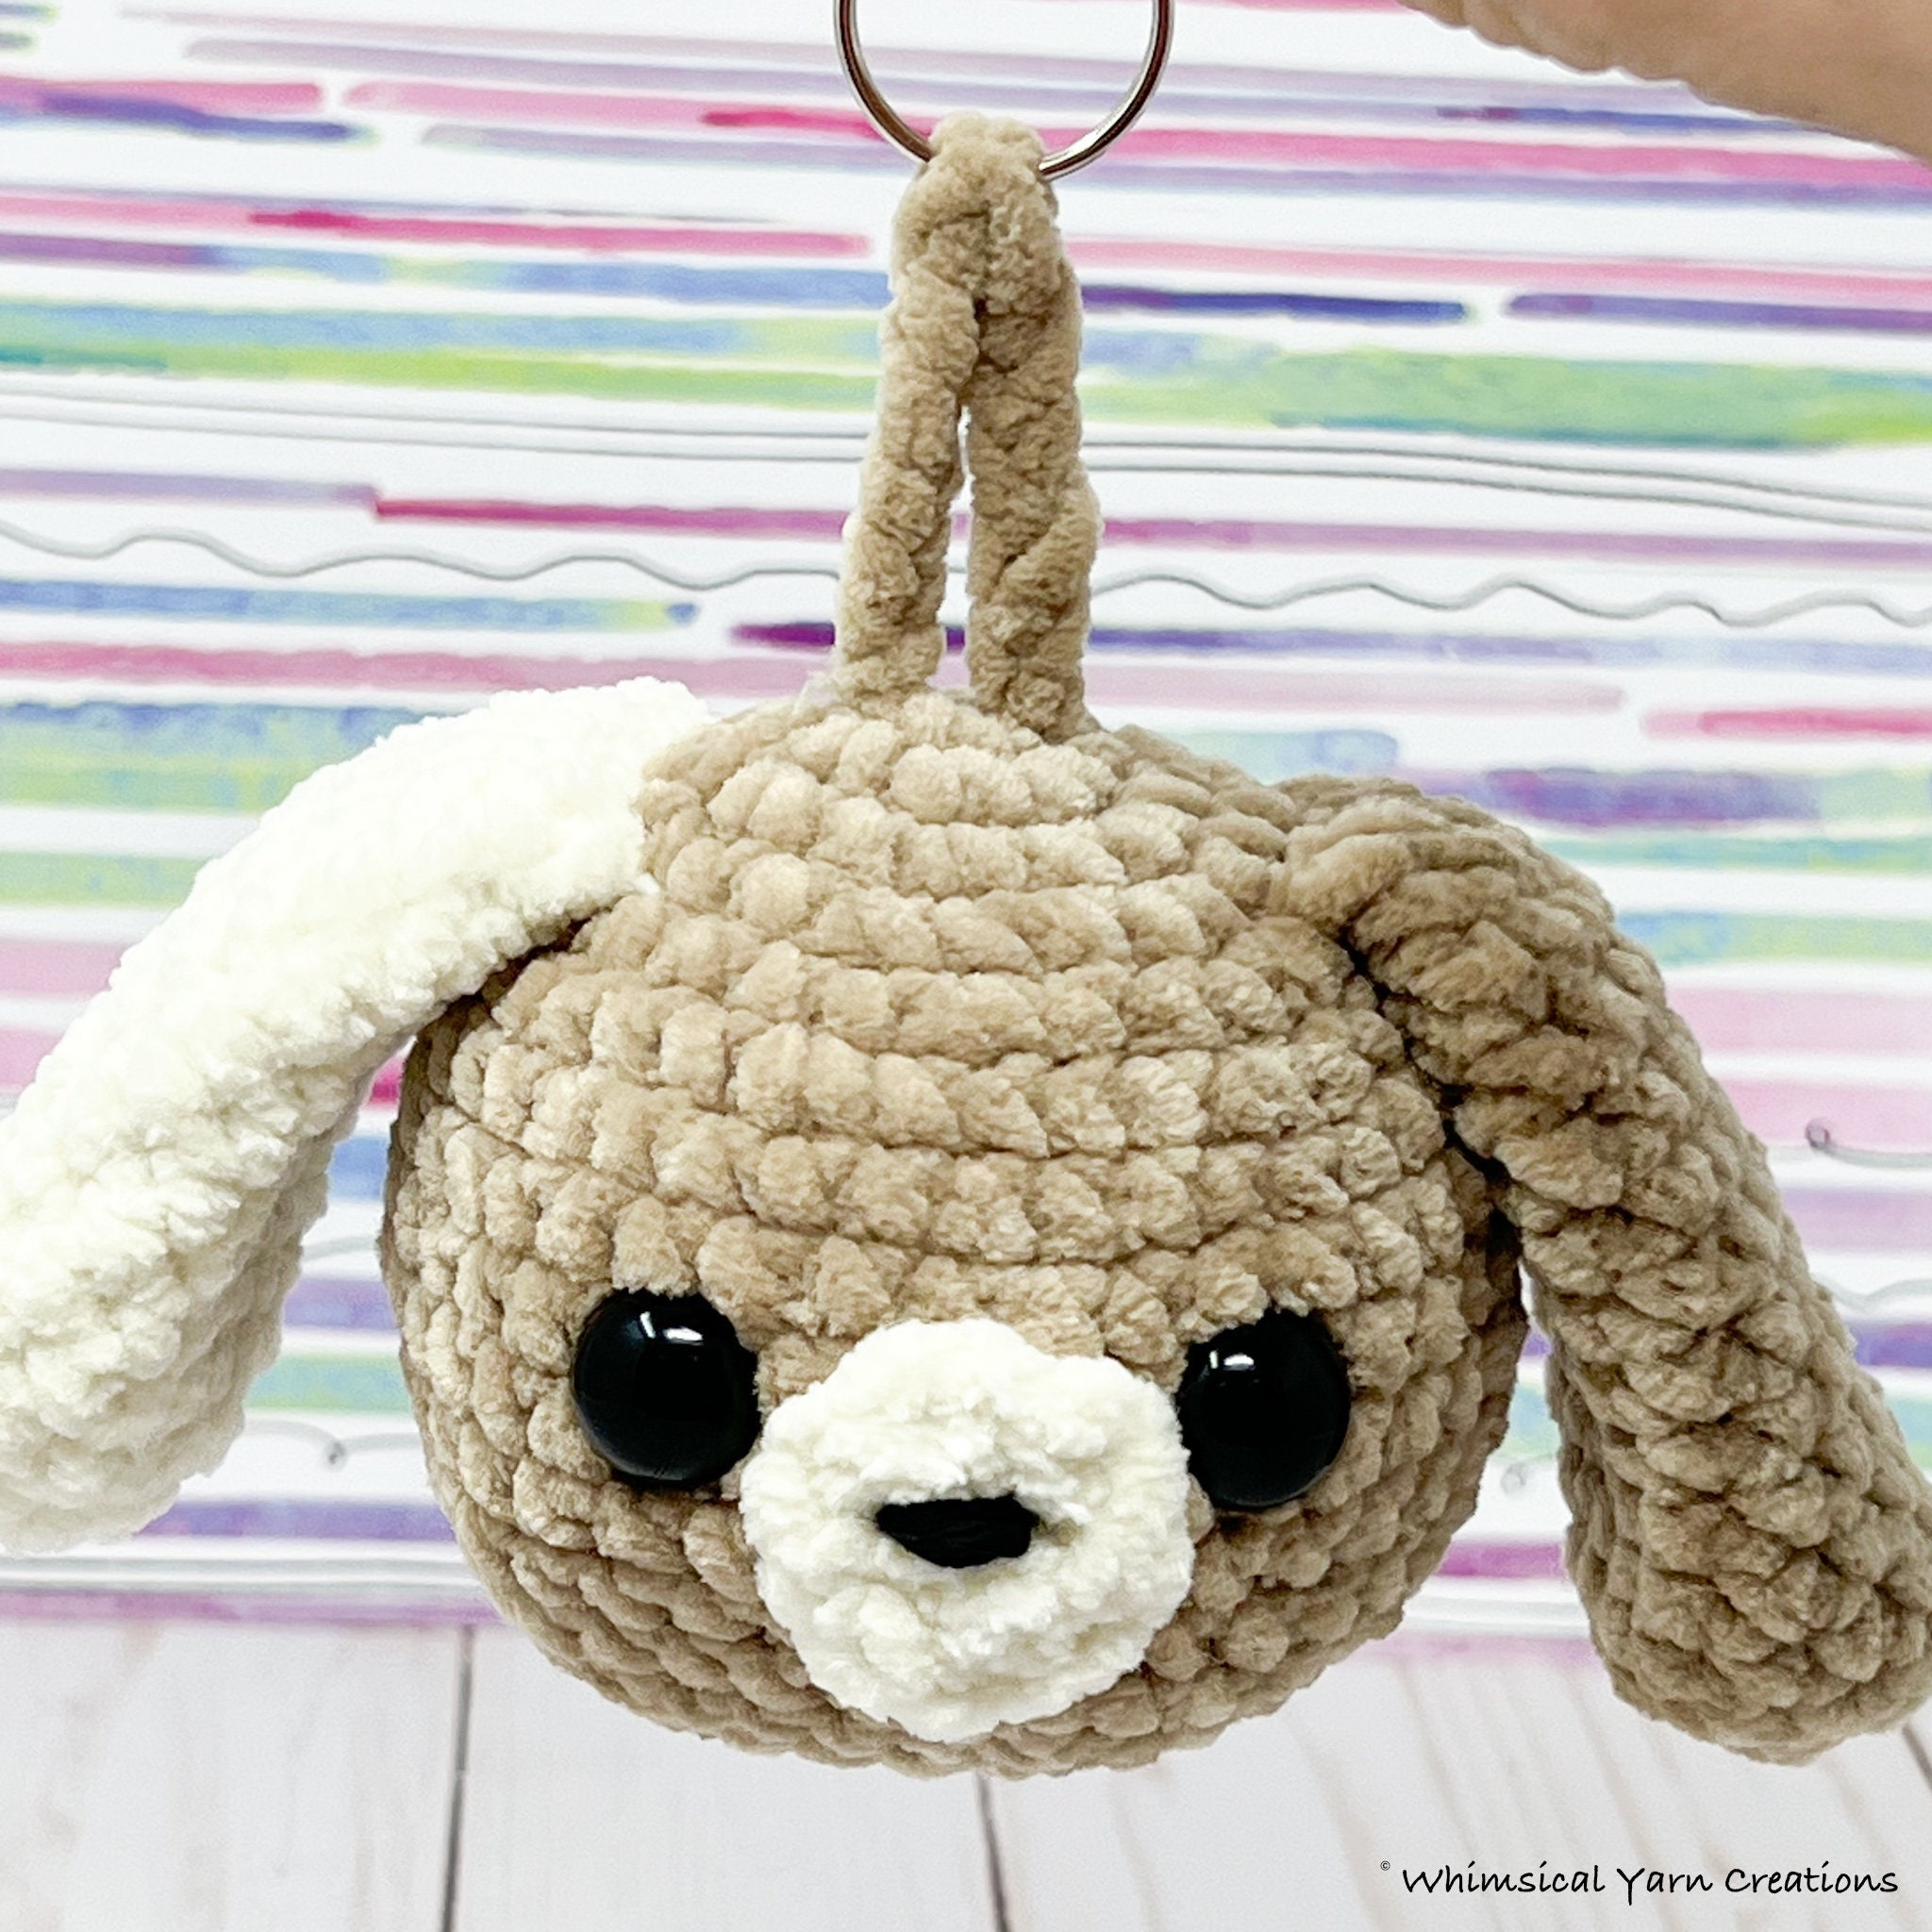 How to crochet keychain / crochet dog 